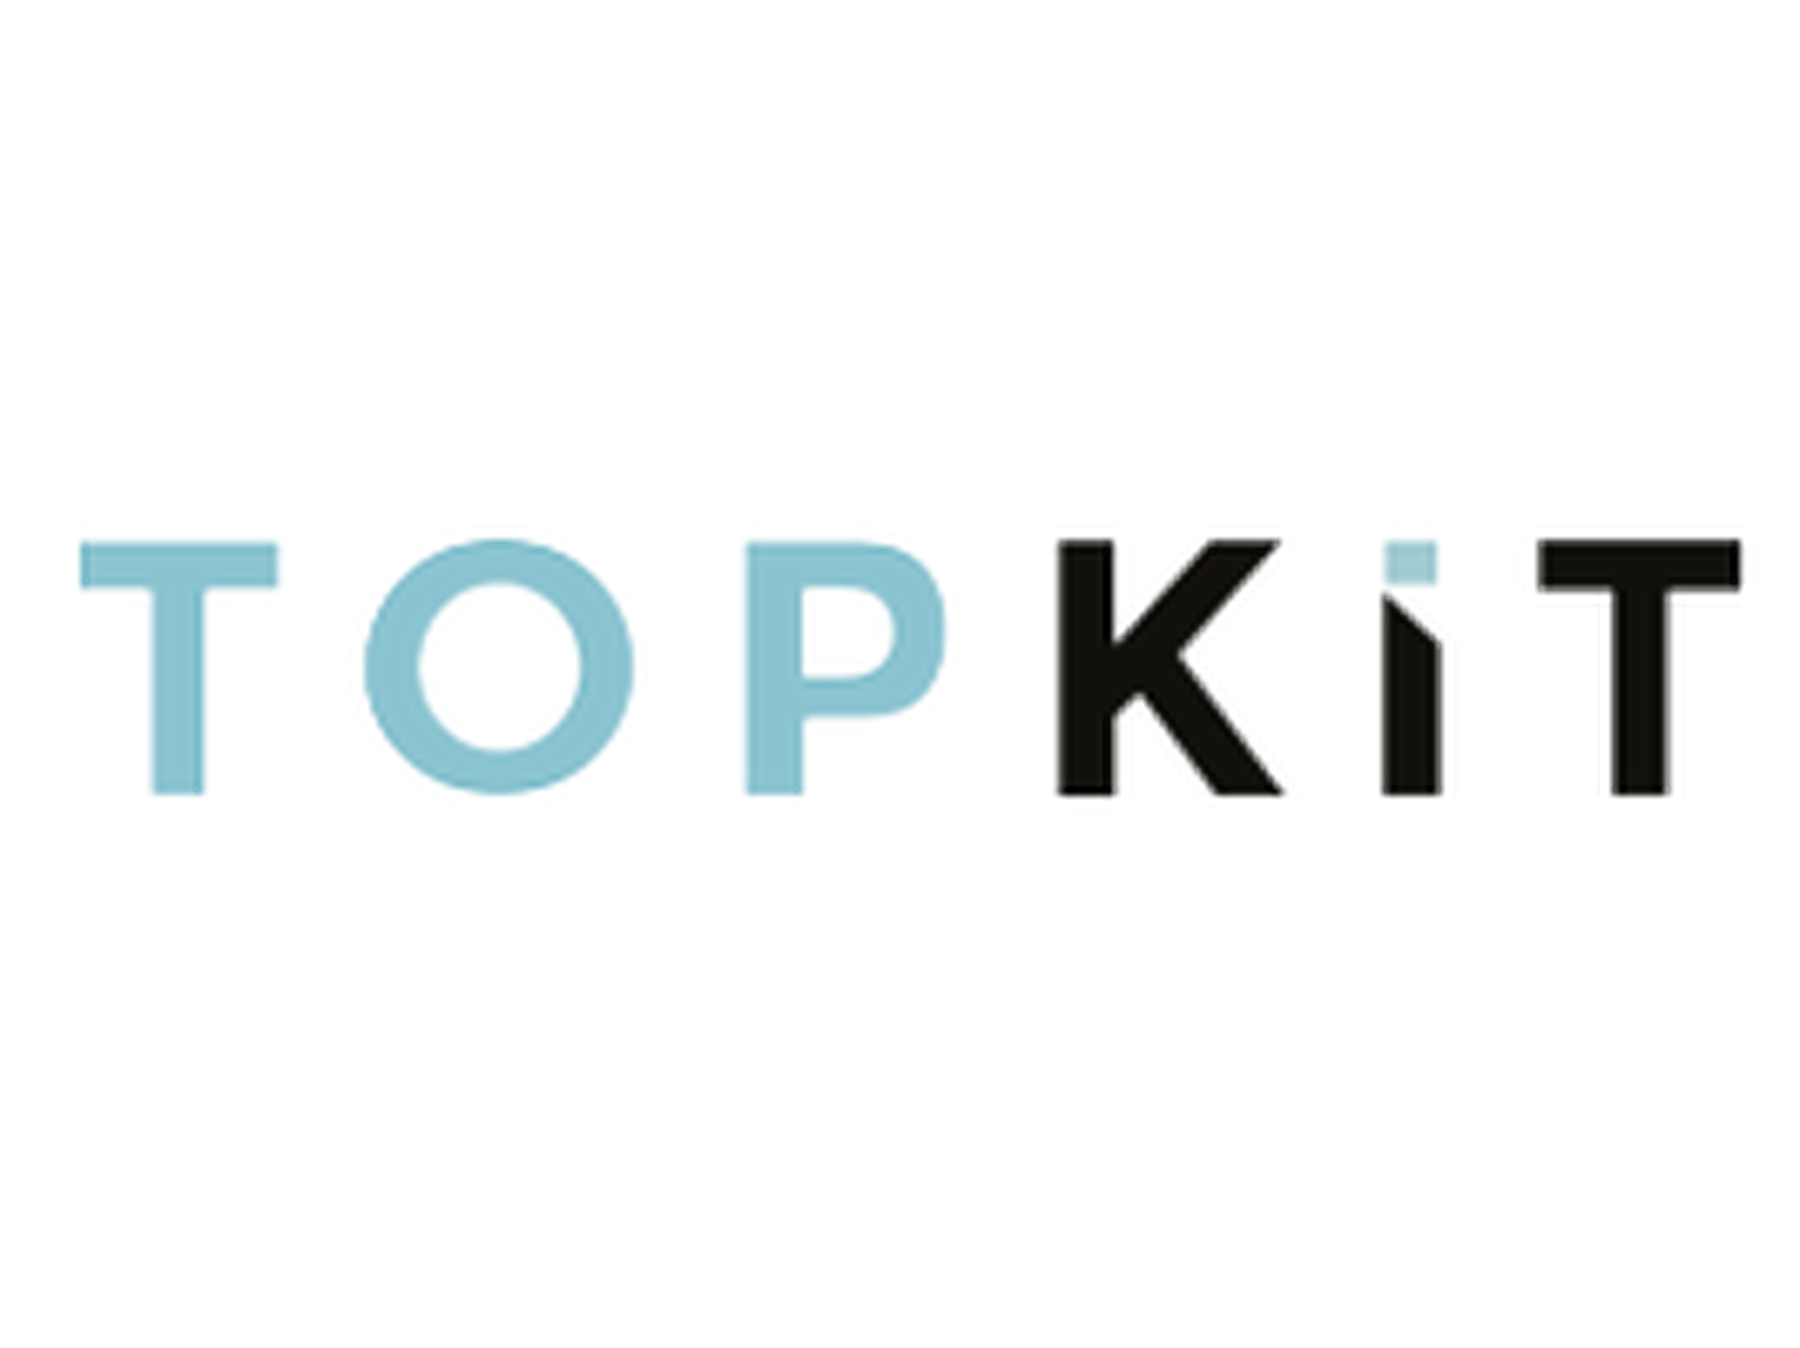 Código promocional Topkit